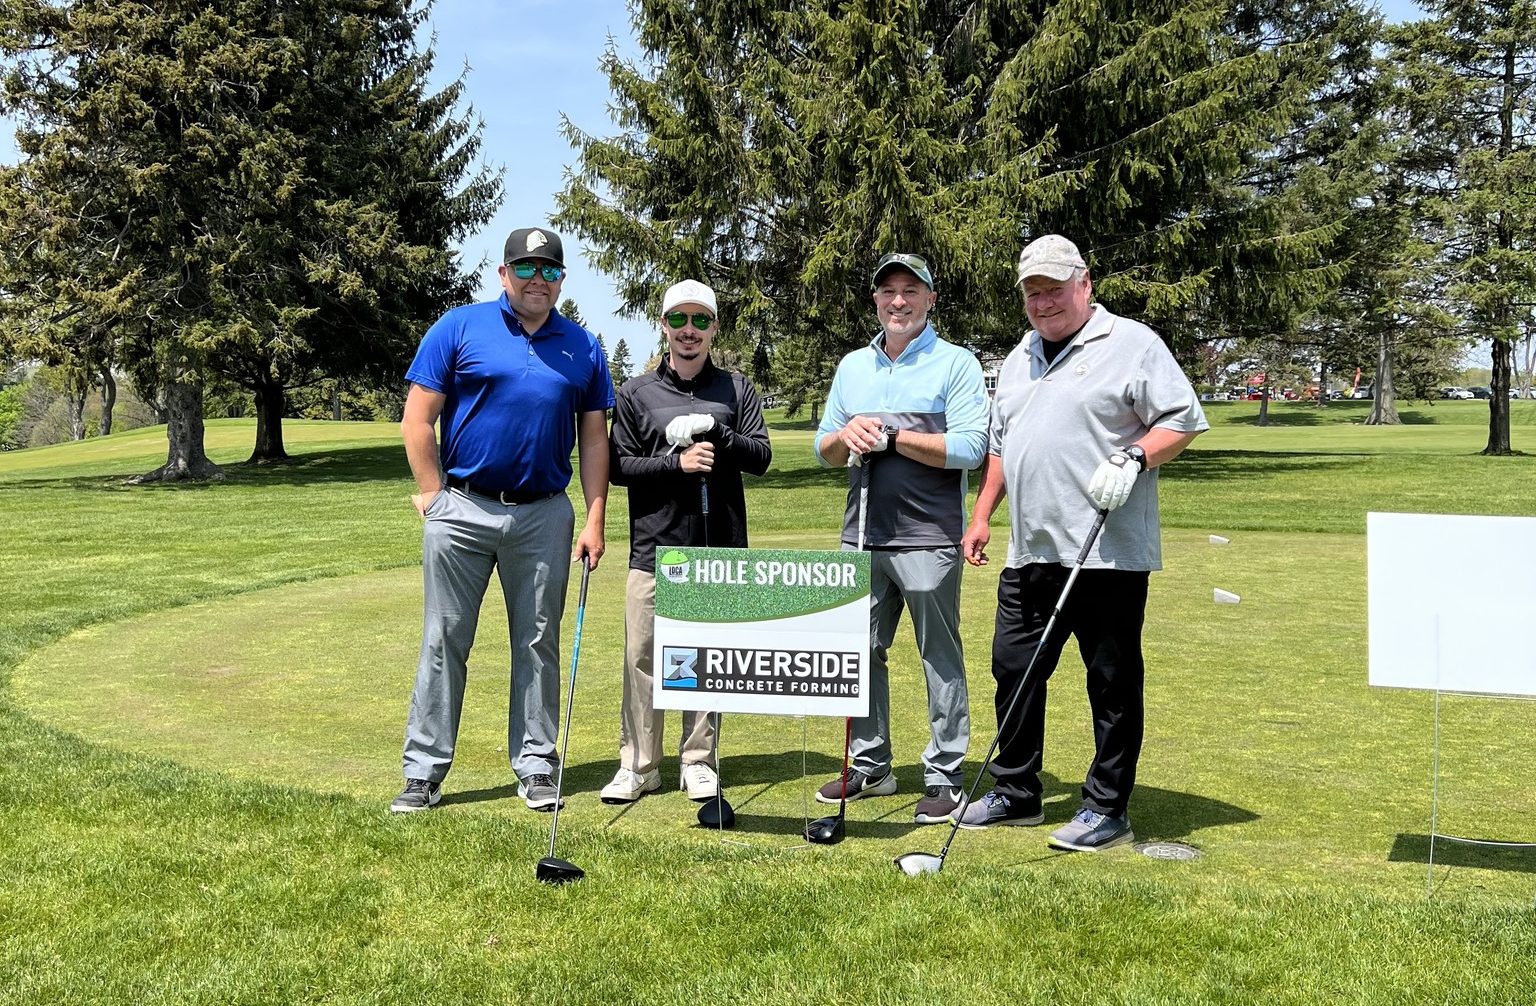 Riverside Forming – Hole Sponsor at LDCA Golf Tournament